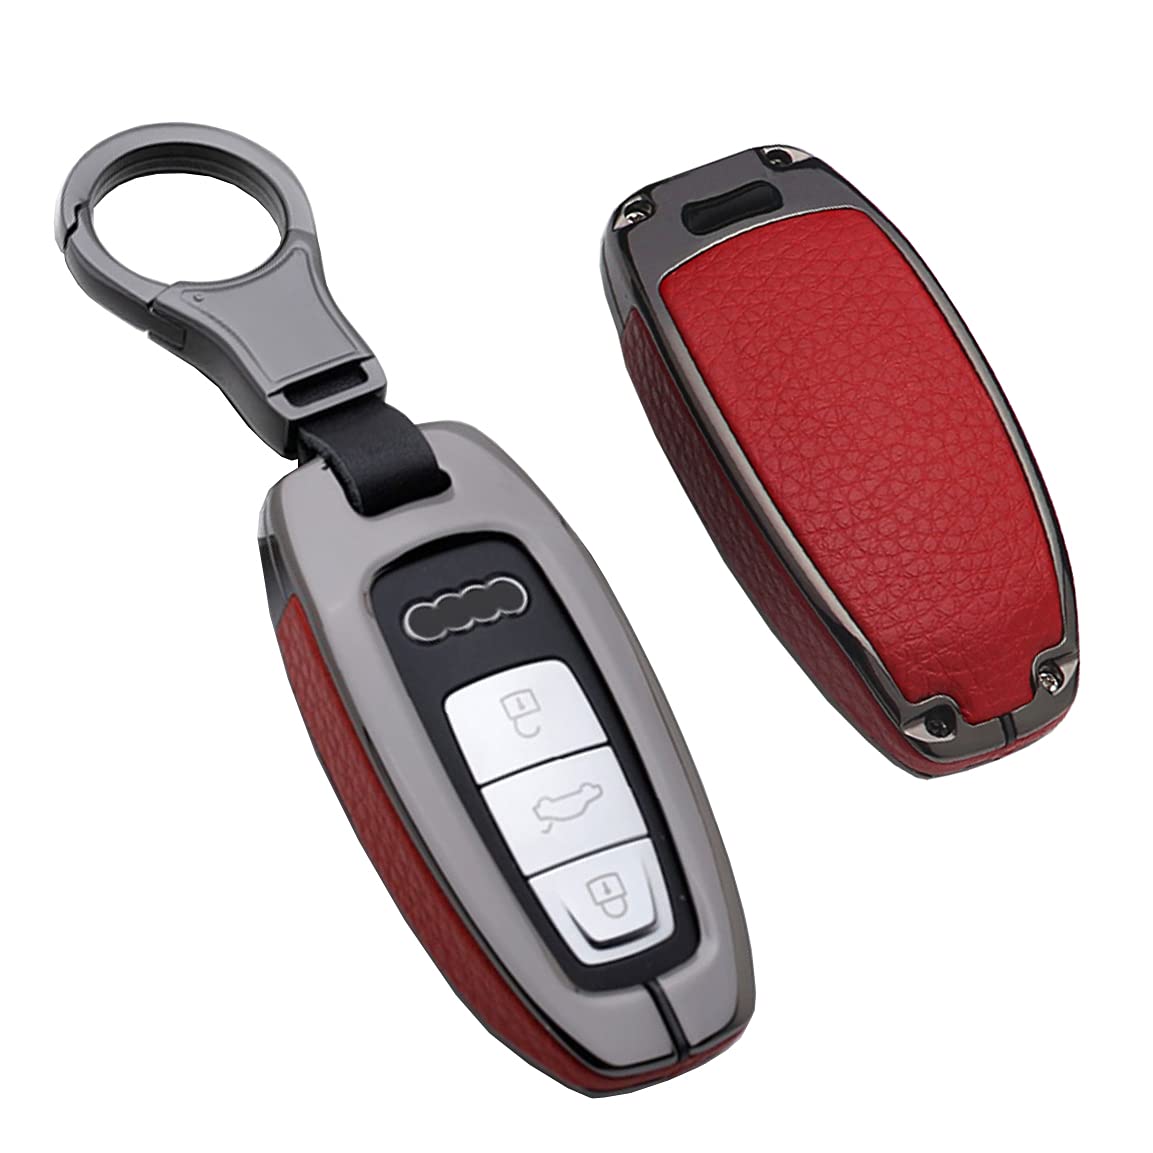 HIBEYO Autoschlüssel Hülle passt für Audi A6 A7 A8 Q7 Q8 E-Tron 3-Tasten Autoschlüssel Keyless Schutzhülle Schlüsselhülle Geeignet Cover Leder Schlüsselbox Smart Schlüssel Autozubehör-Schwarz Rot von HIBEYO